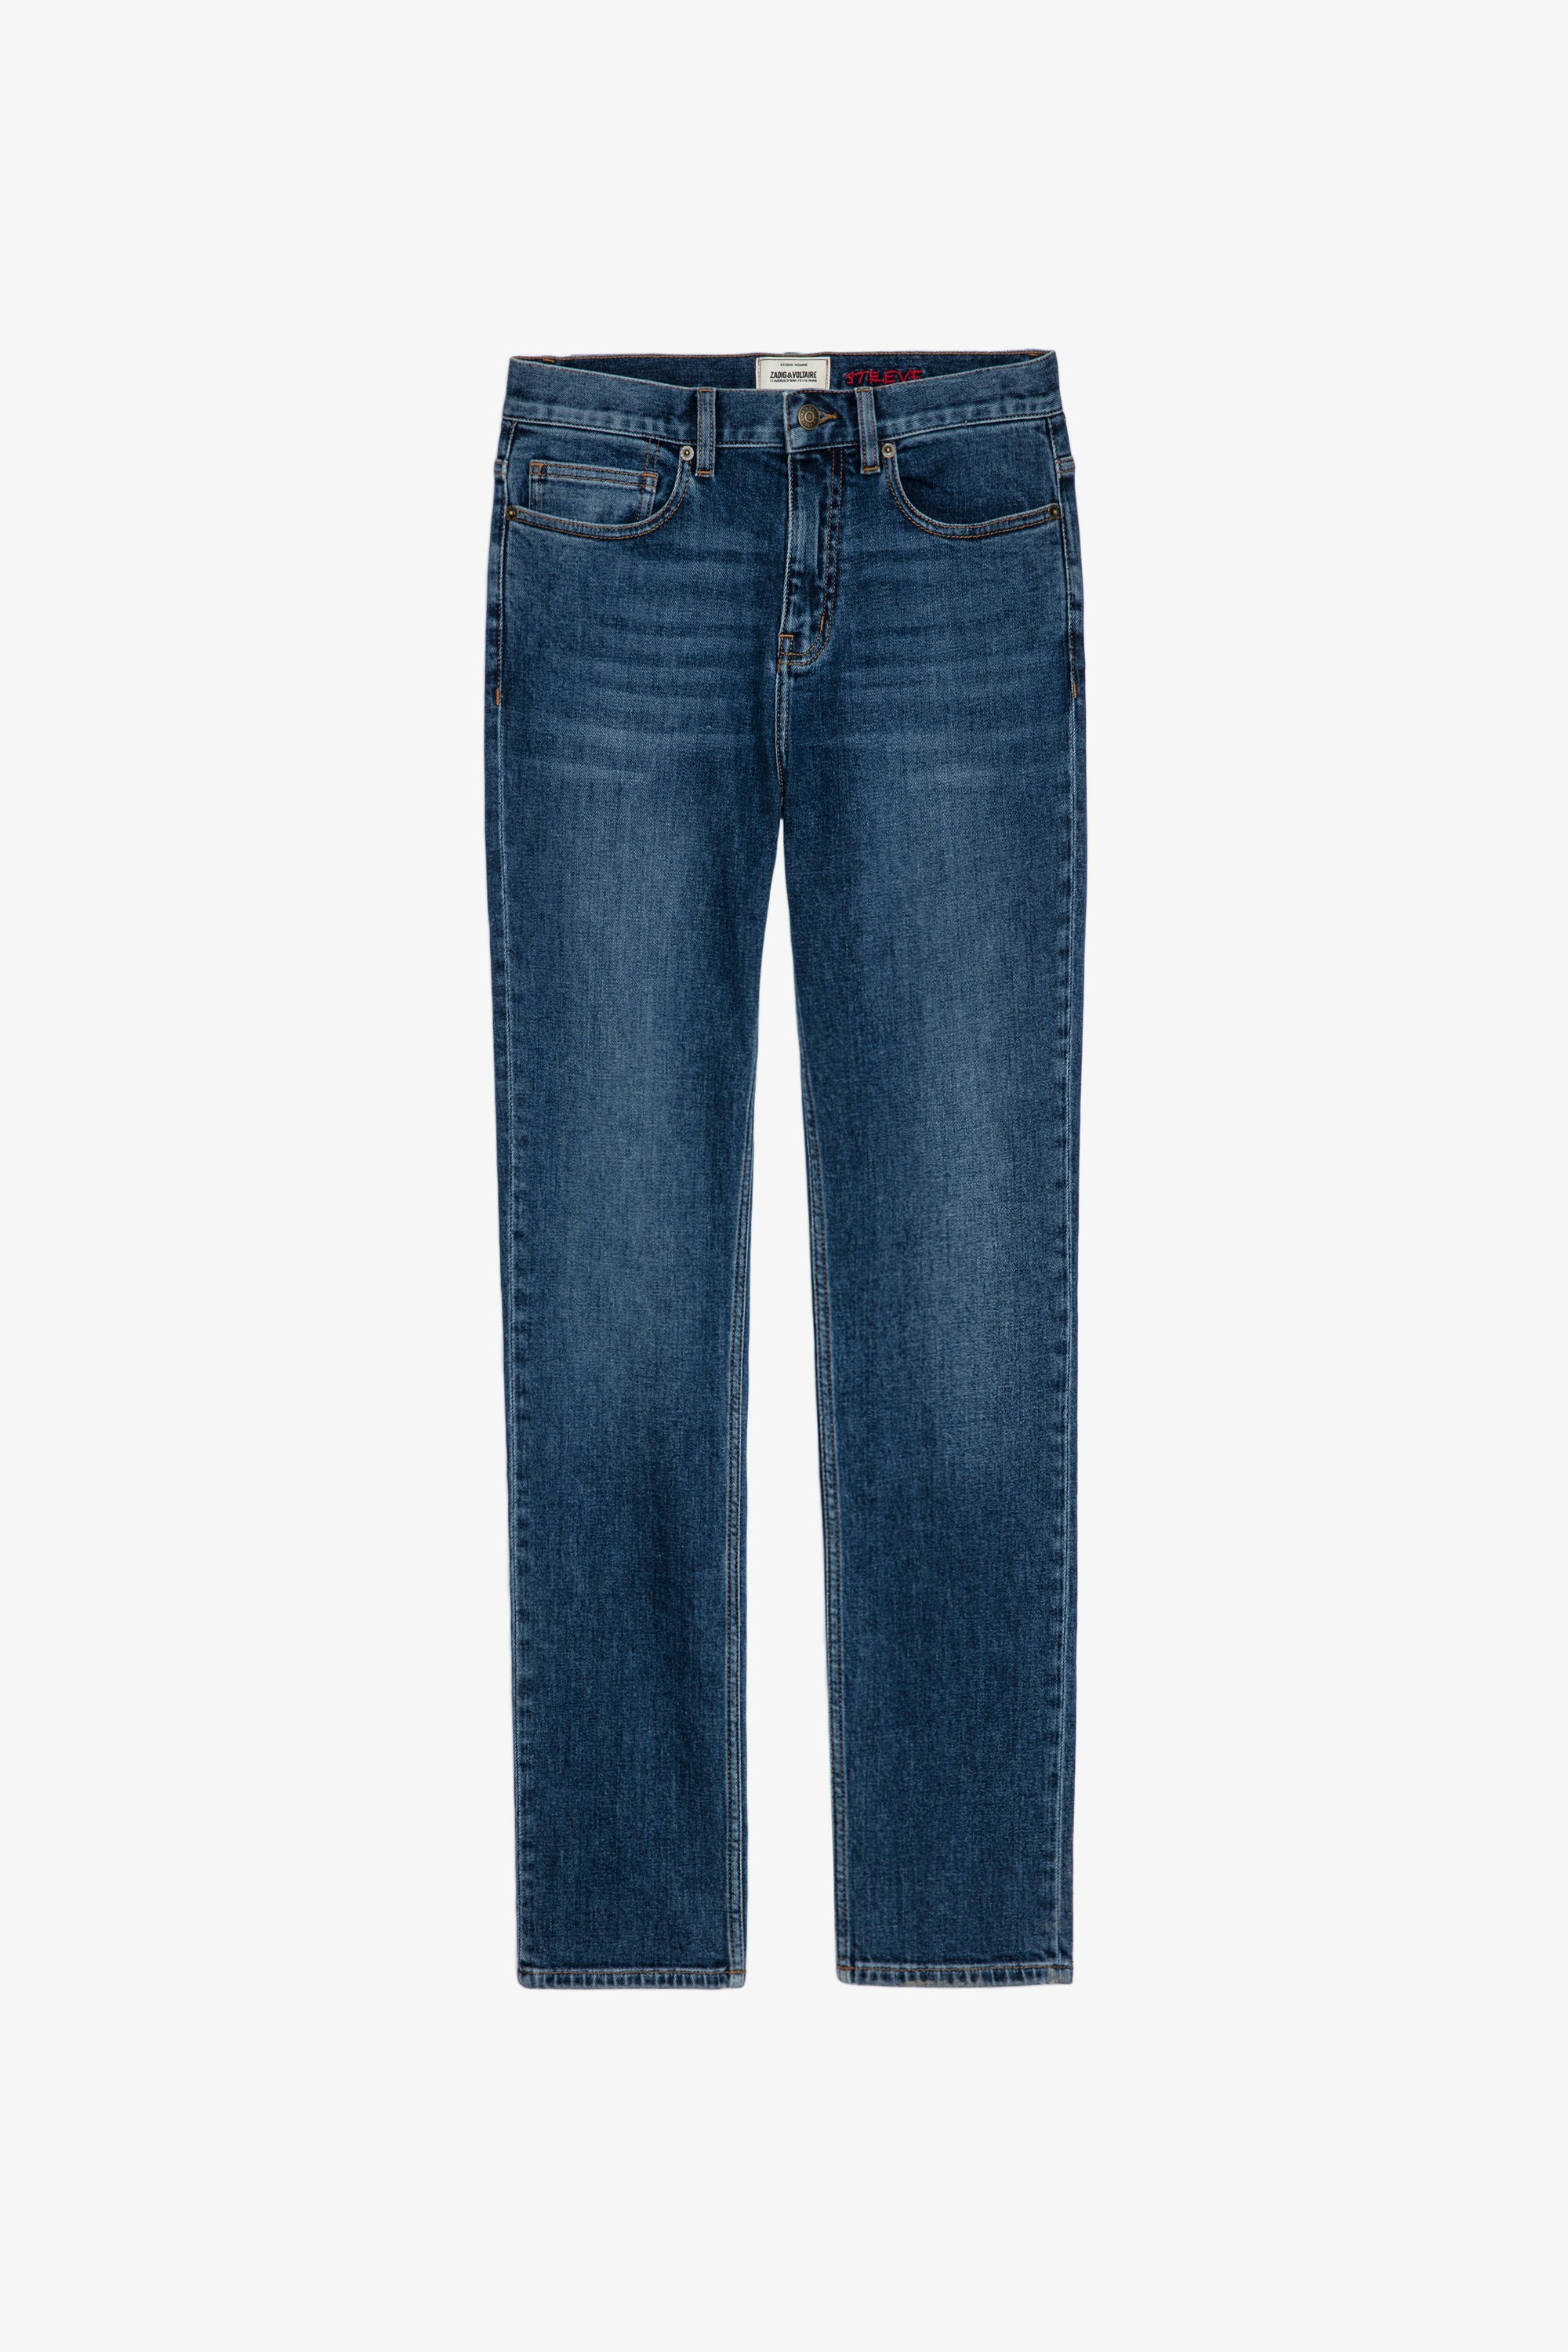 Steeve Jeans Men’s regular-fit blue denim jeans